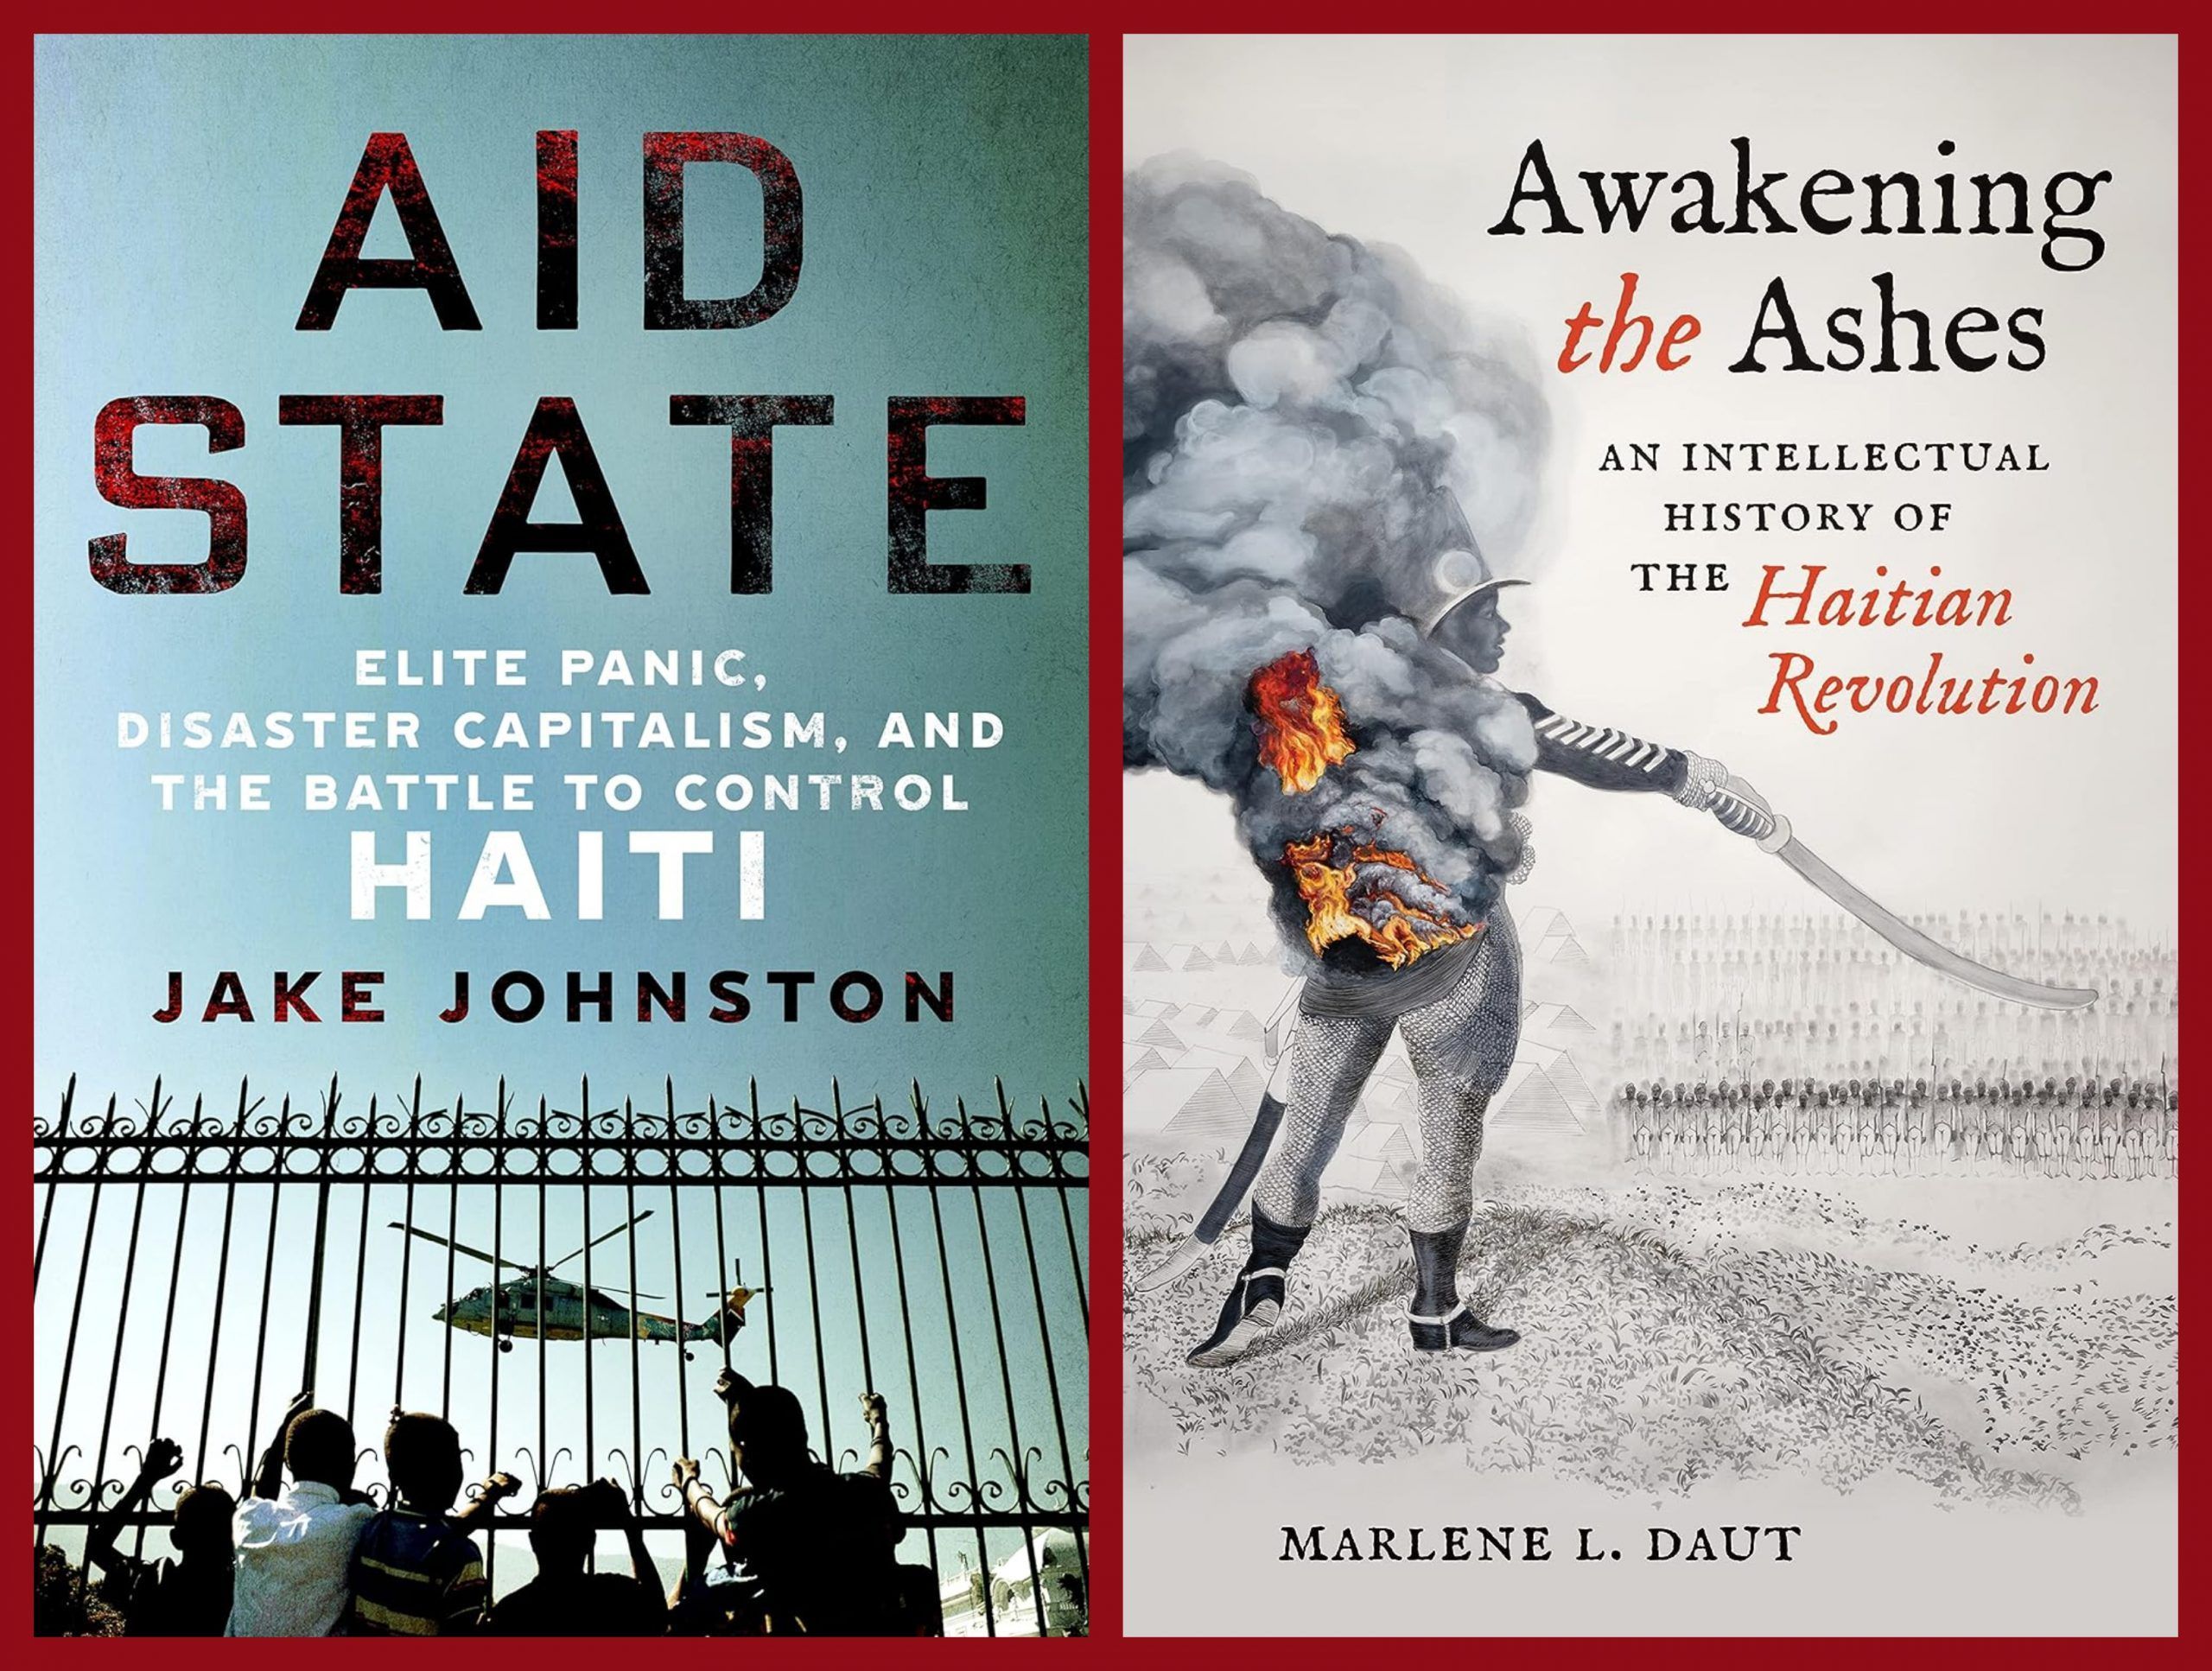 Haiti Reimagined: On Marlene L. Daut’s “Awakening the Ashes” and Jake Johnston’s “Aid State”